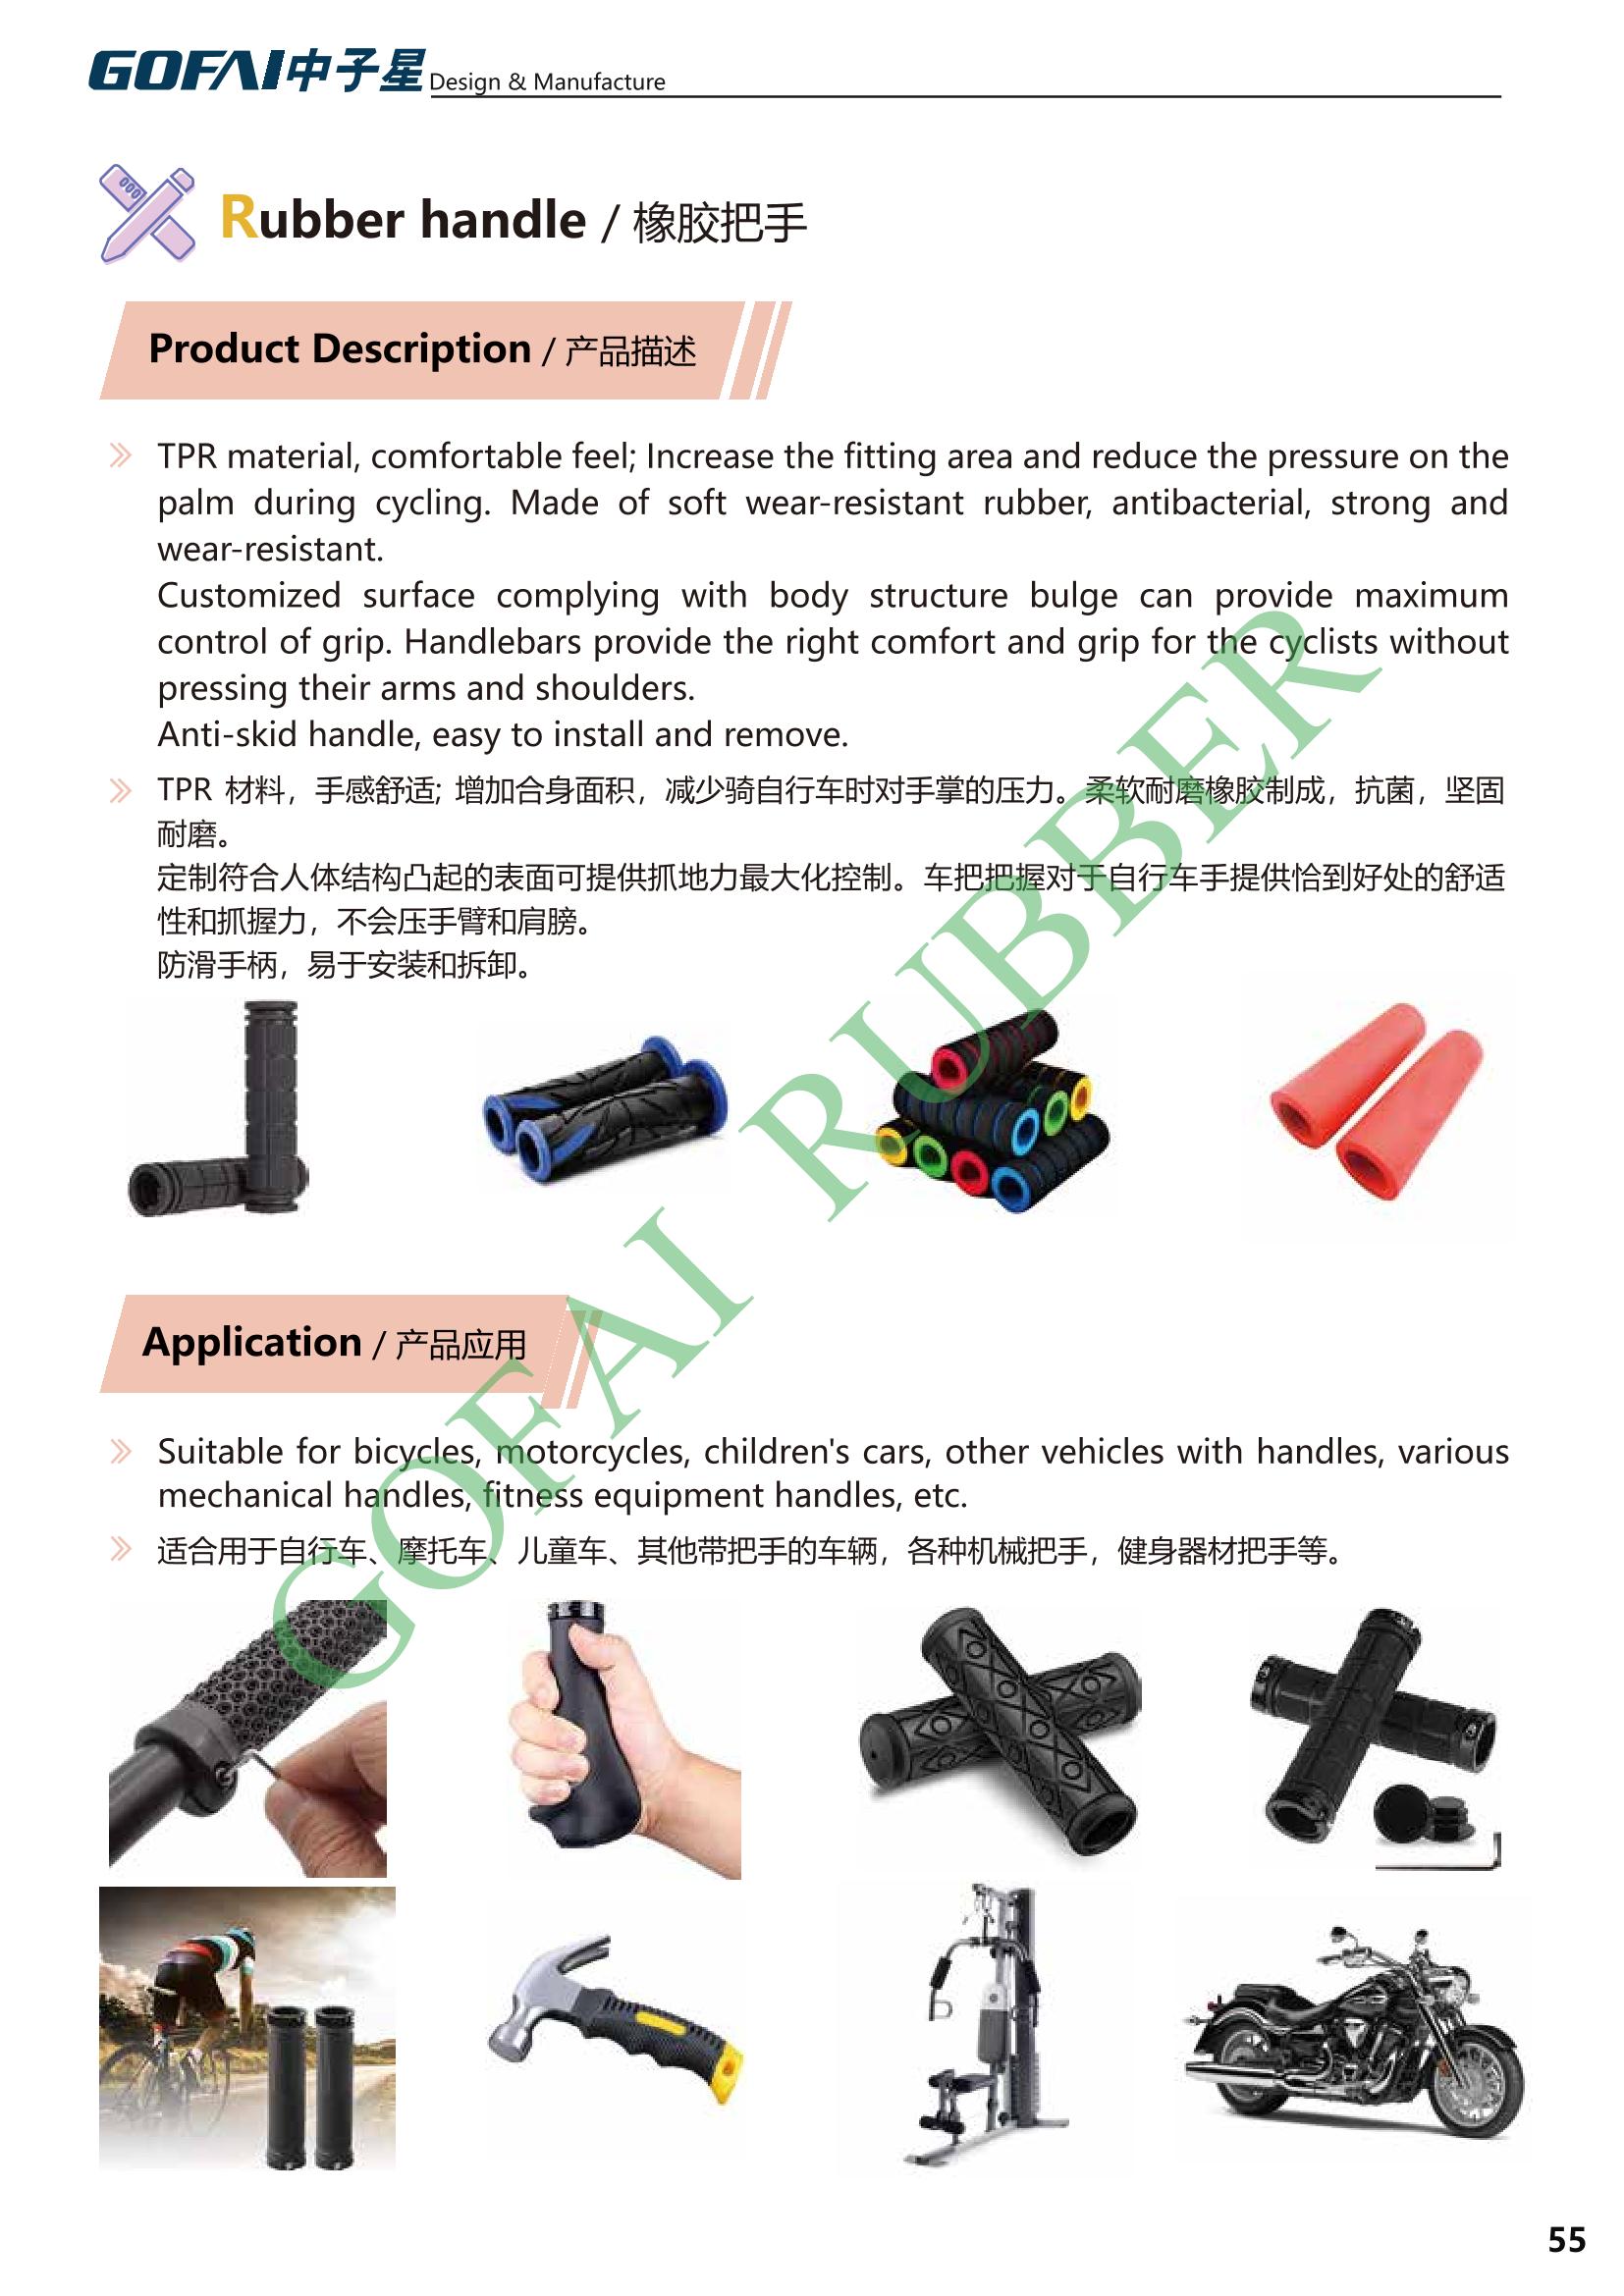 GOFAI rubberplastic products cataloge_55.jpg